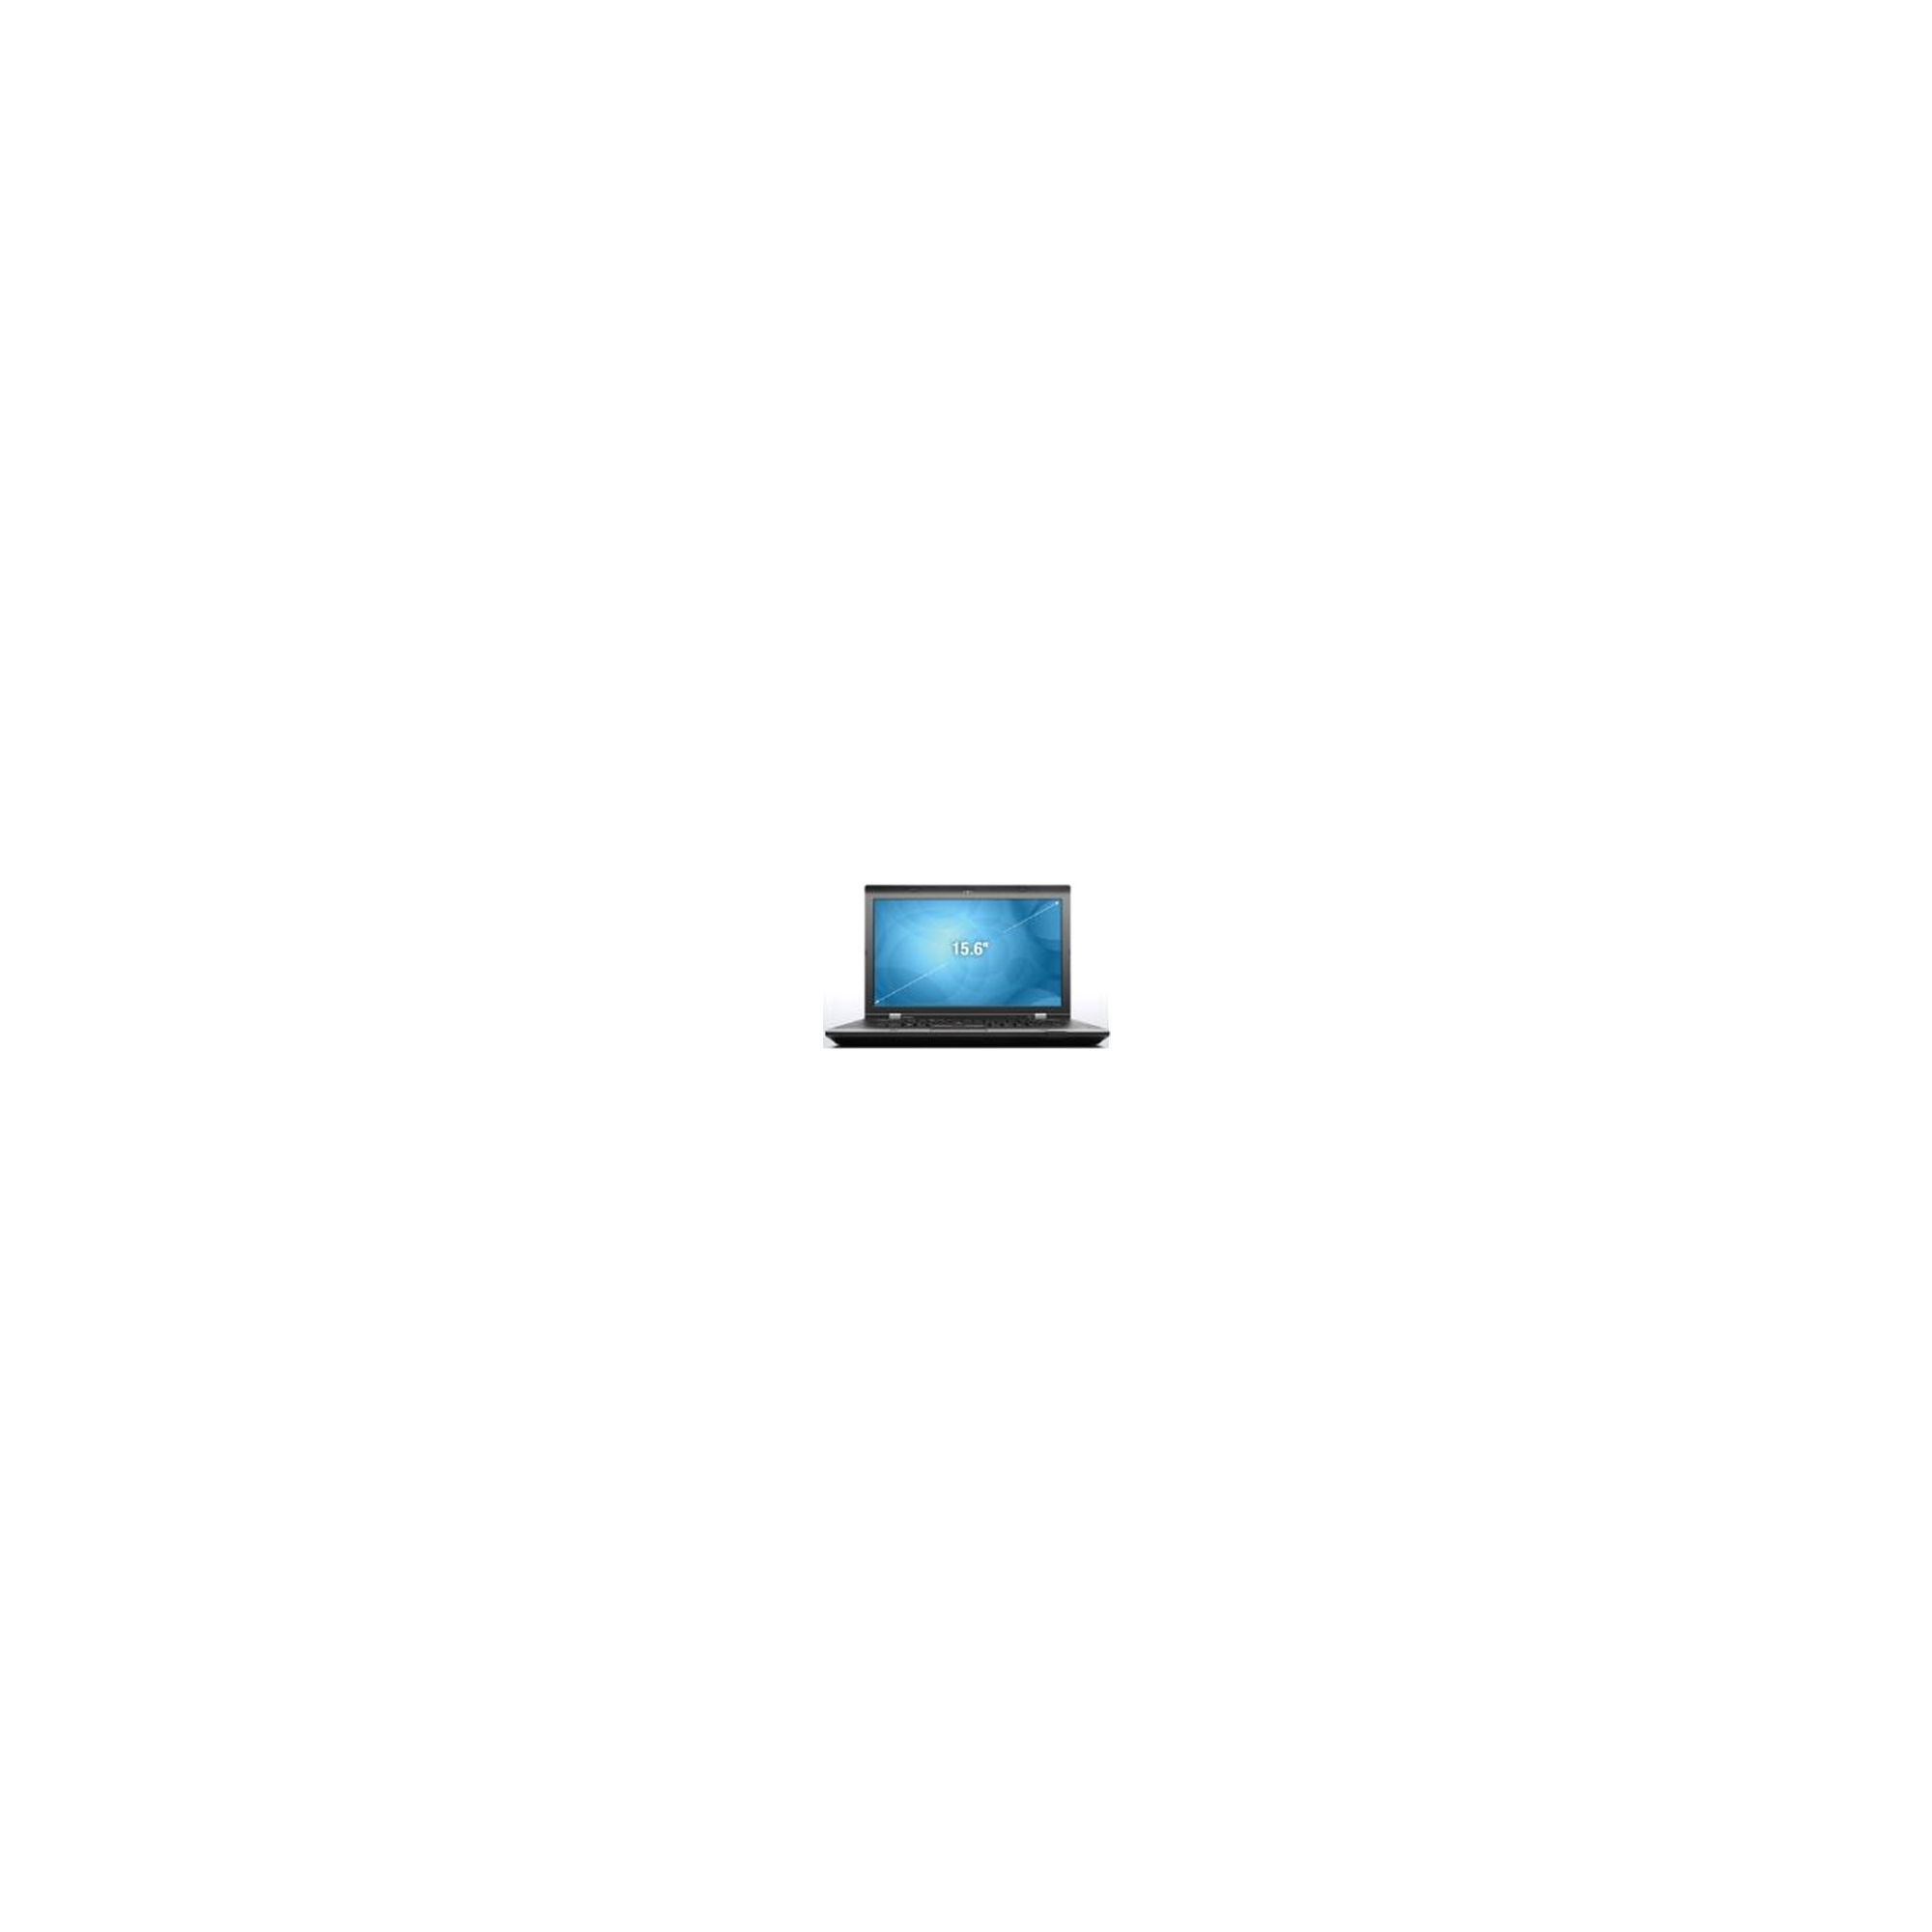 Lenovo ThinkPad L530 24813SG (15.6 inch) Notebook Core i3 (3110M) 2.4GHz 4GB 500GB DVD±RW WLAN BT Webcam Windows 7 Pro 64-bit/Windows 8 Pro 64-bit at Tescos Direct